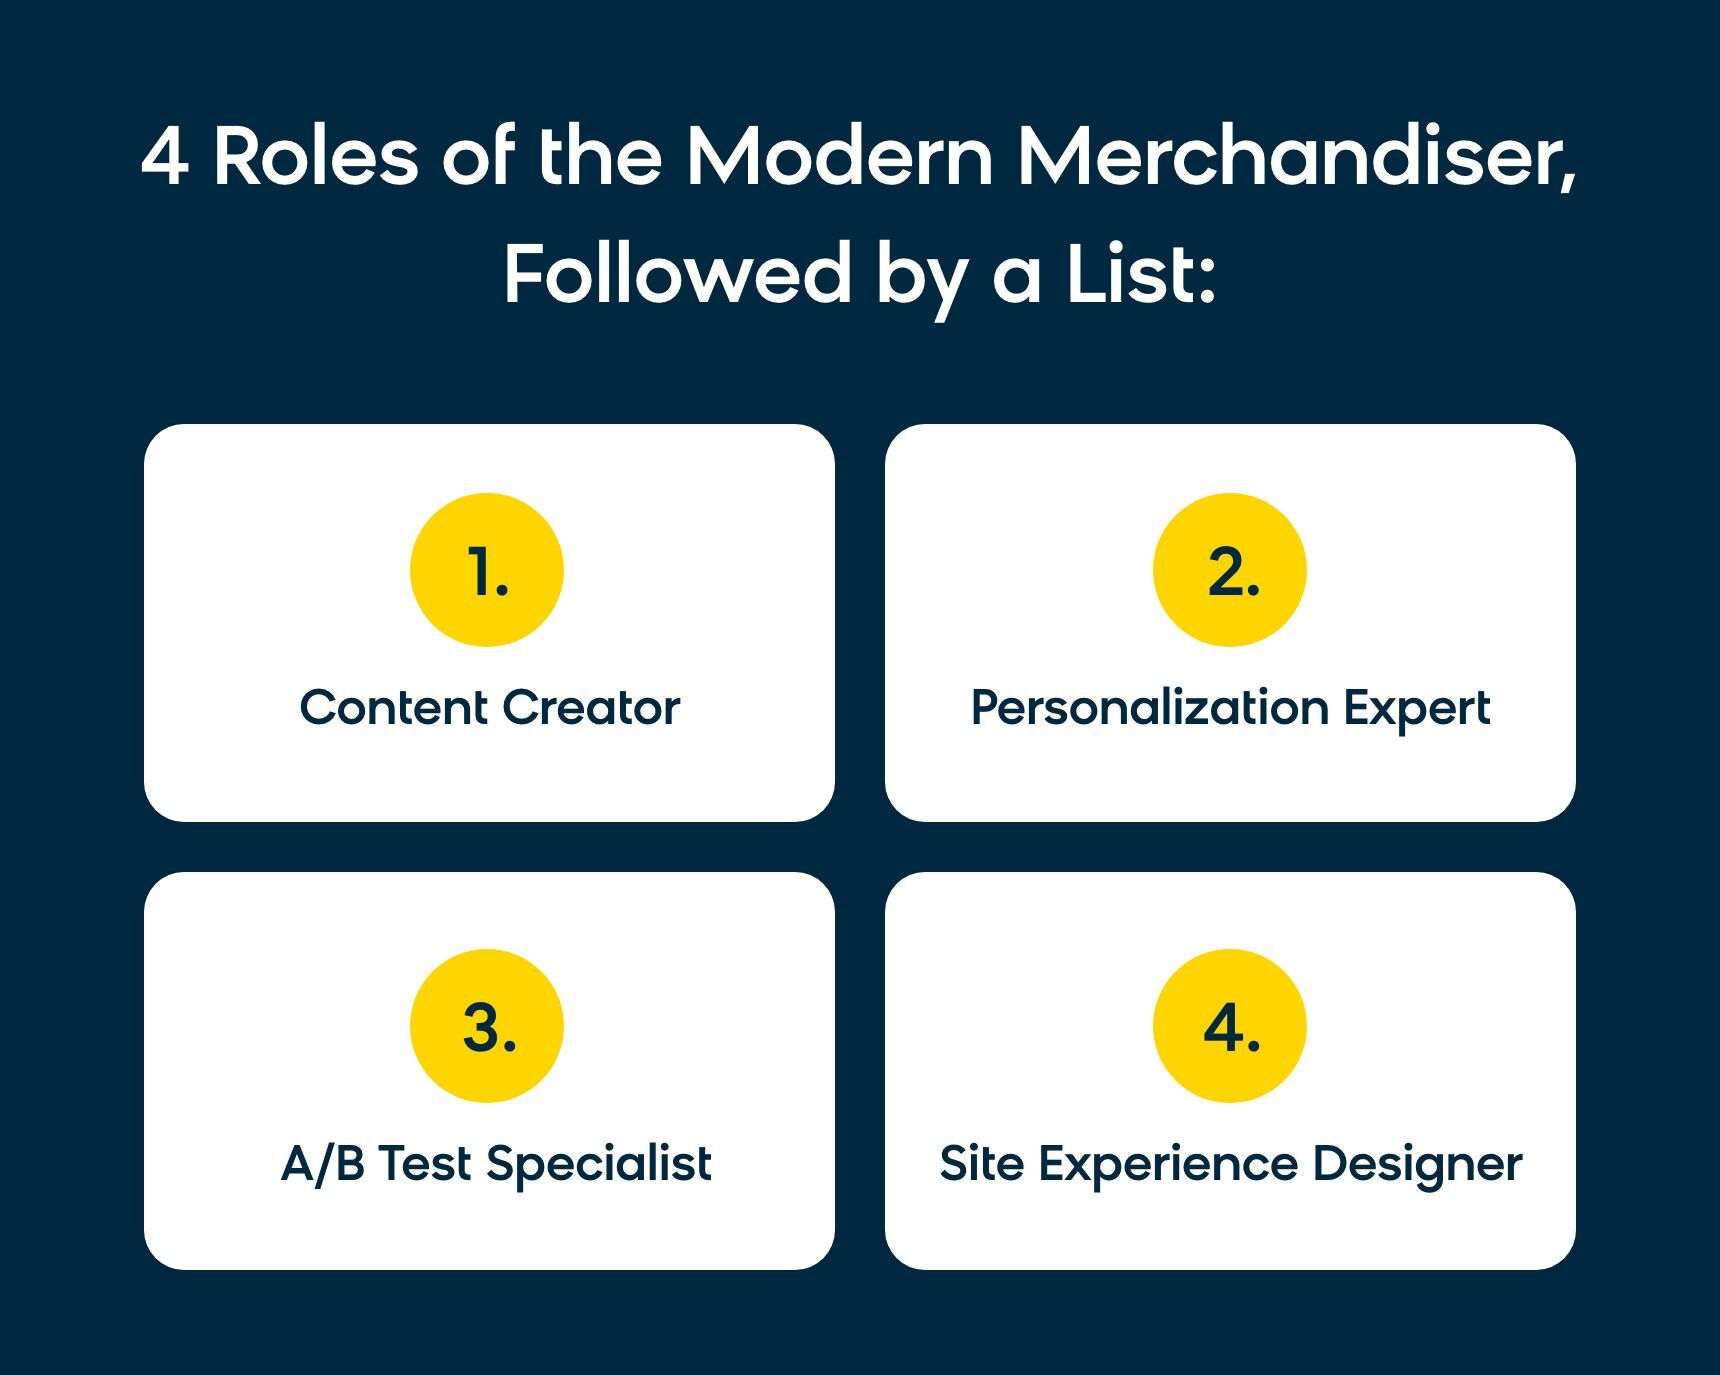 Roles of the modern merchandiser